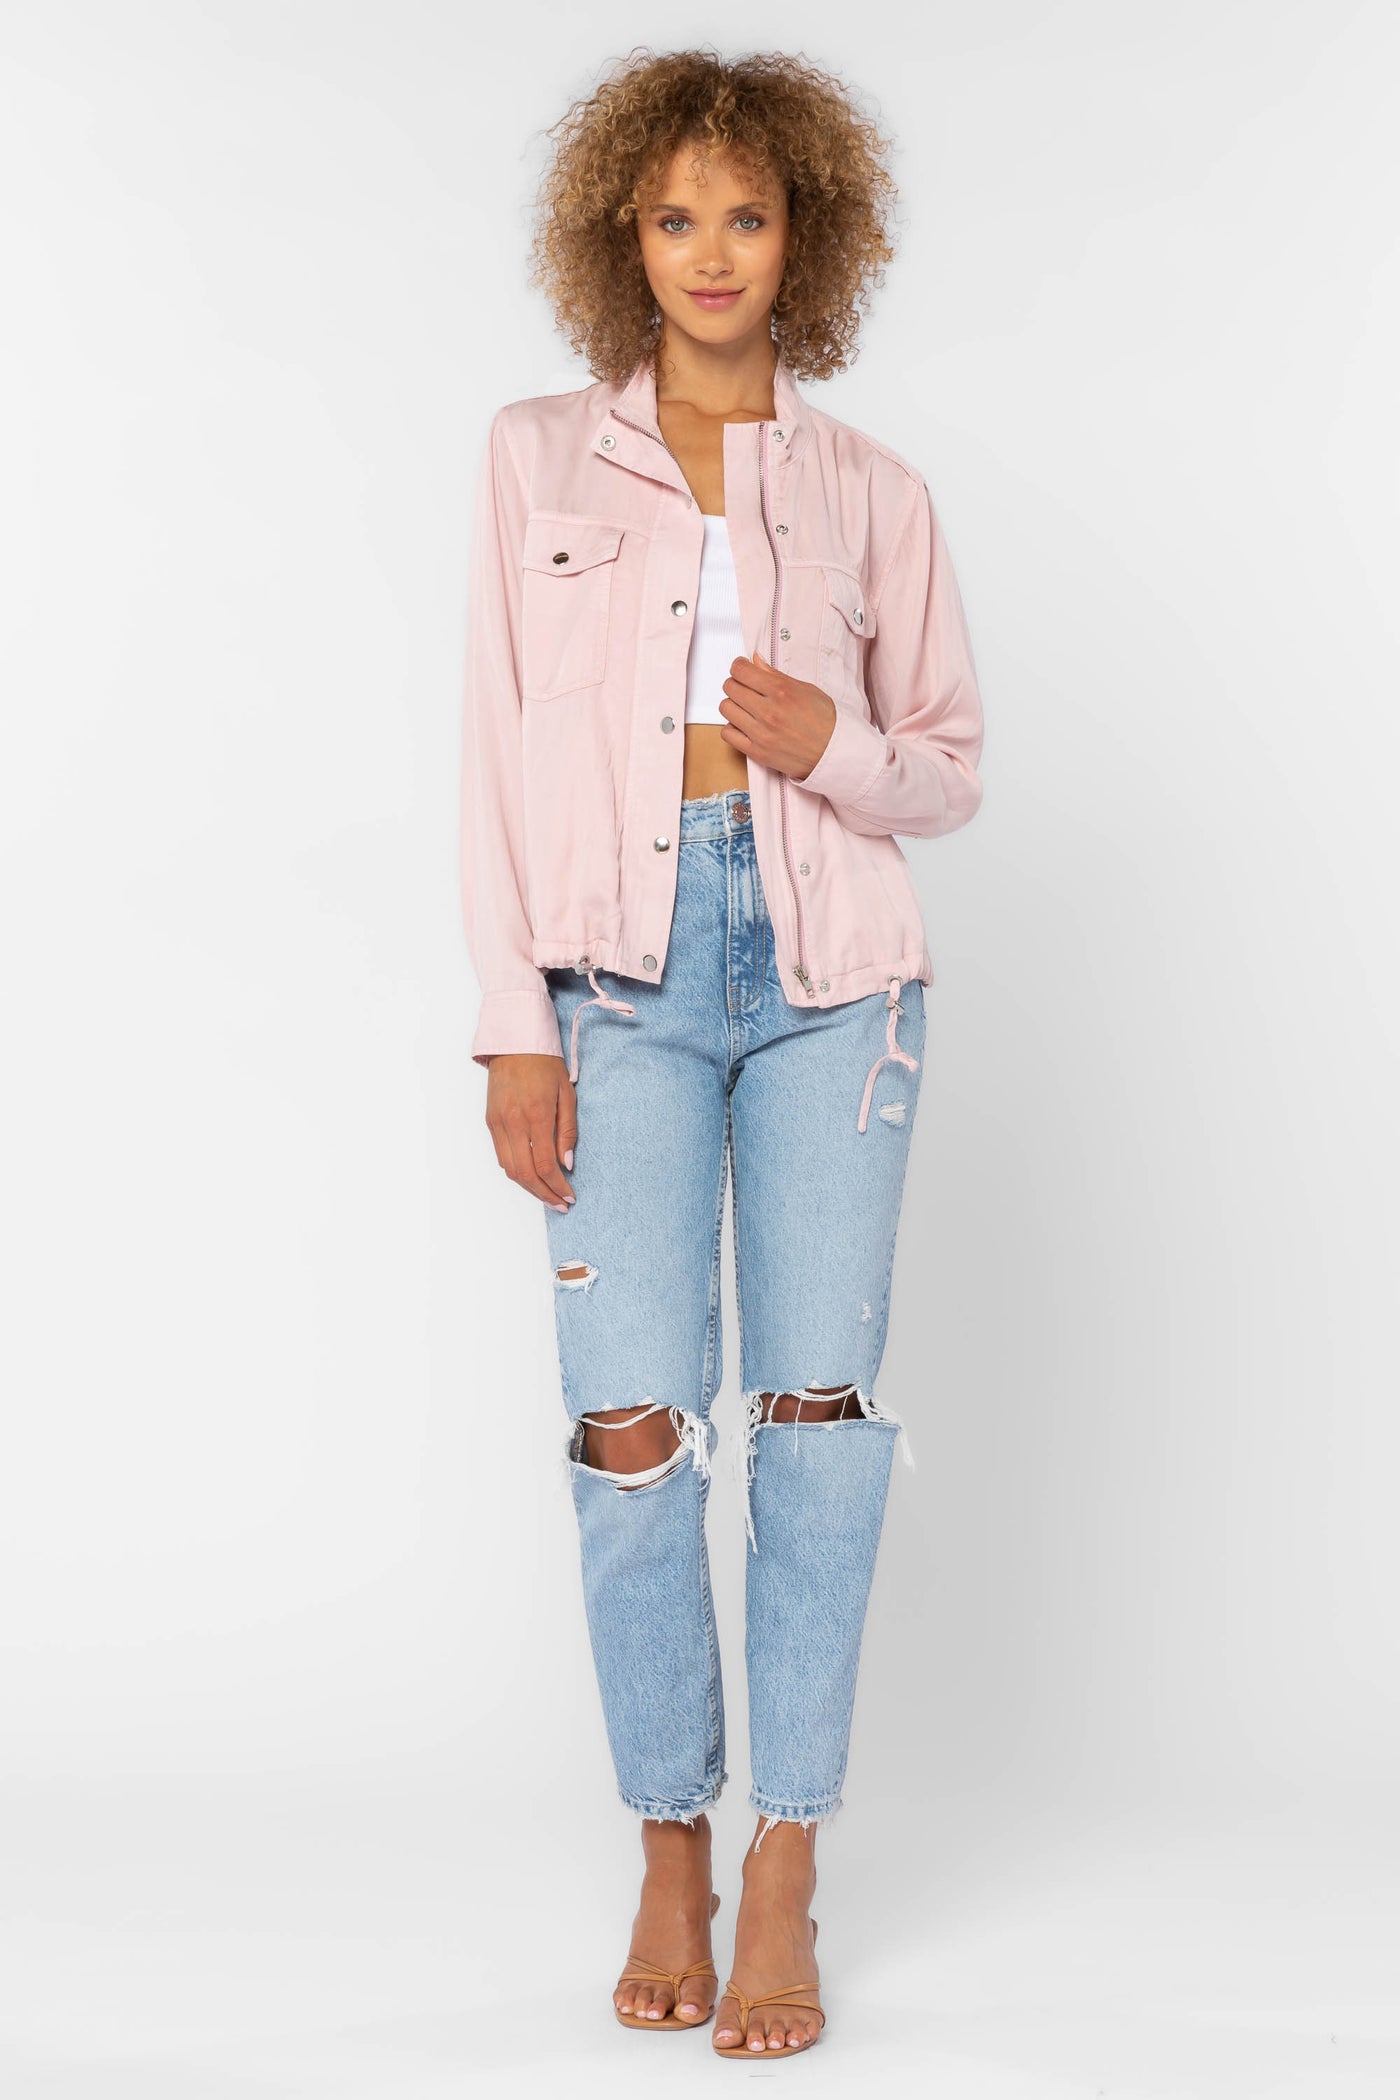 Dunkin Pink Jacket - Jackets & Outerwear - Velvet Heart Clothing